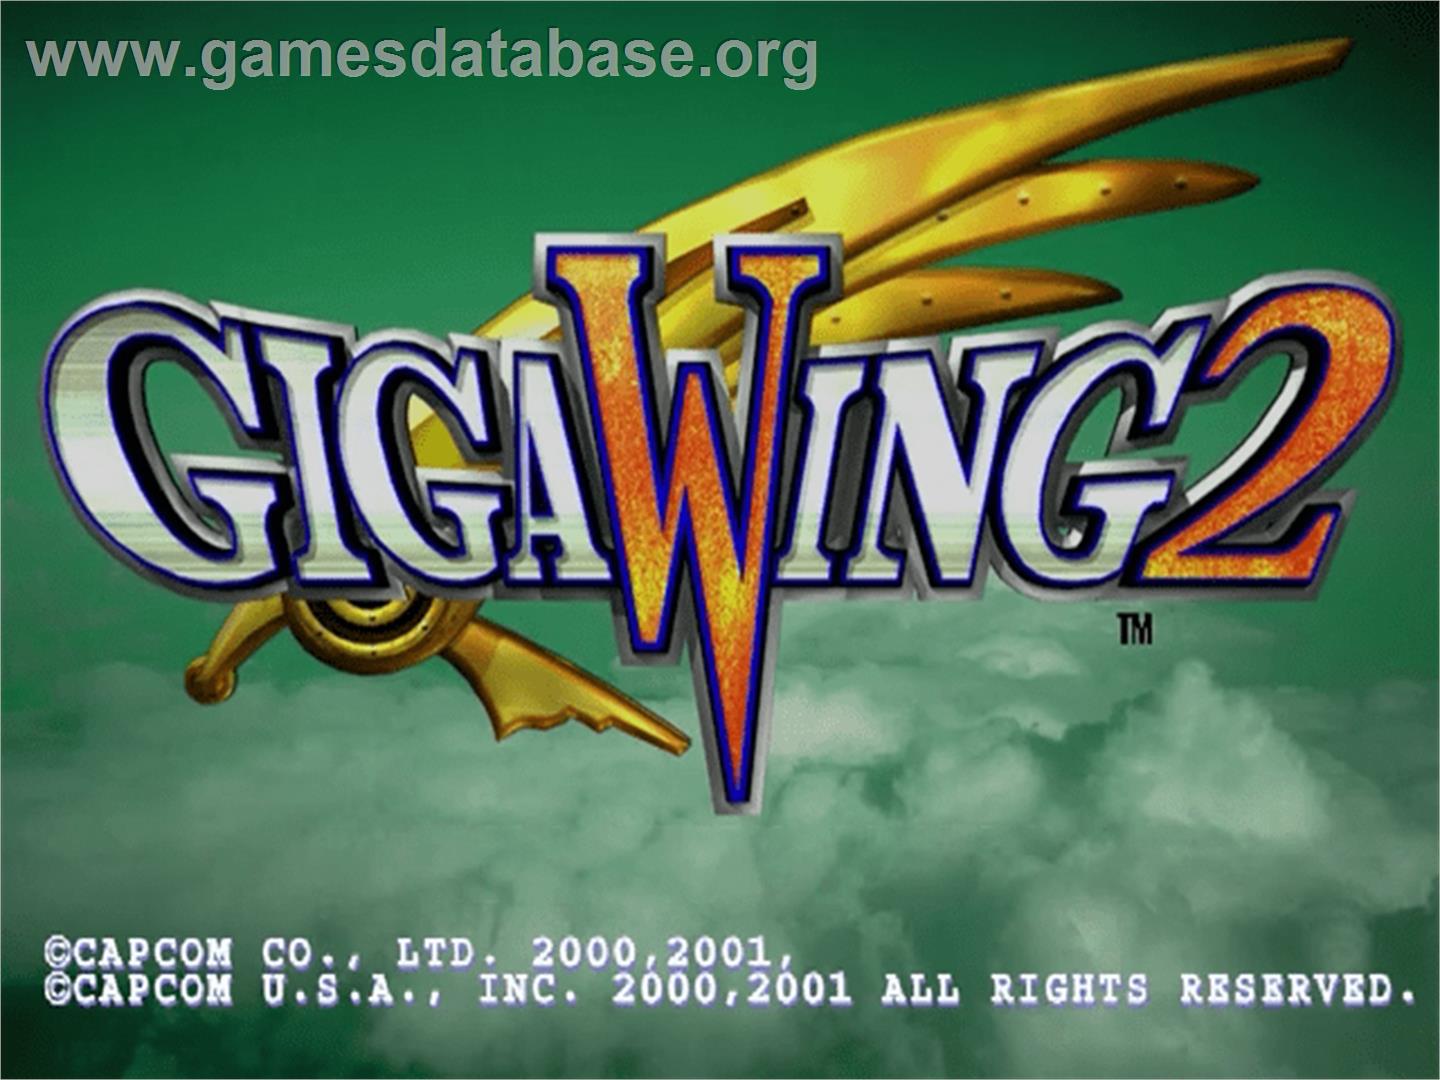 GigaWing 2 - Sega Dreamcast - Artwork - Title Screen